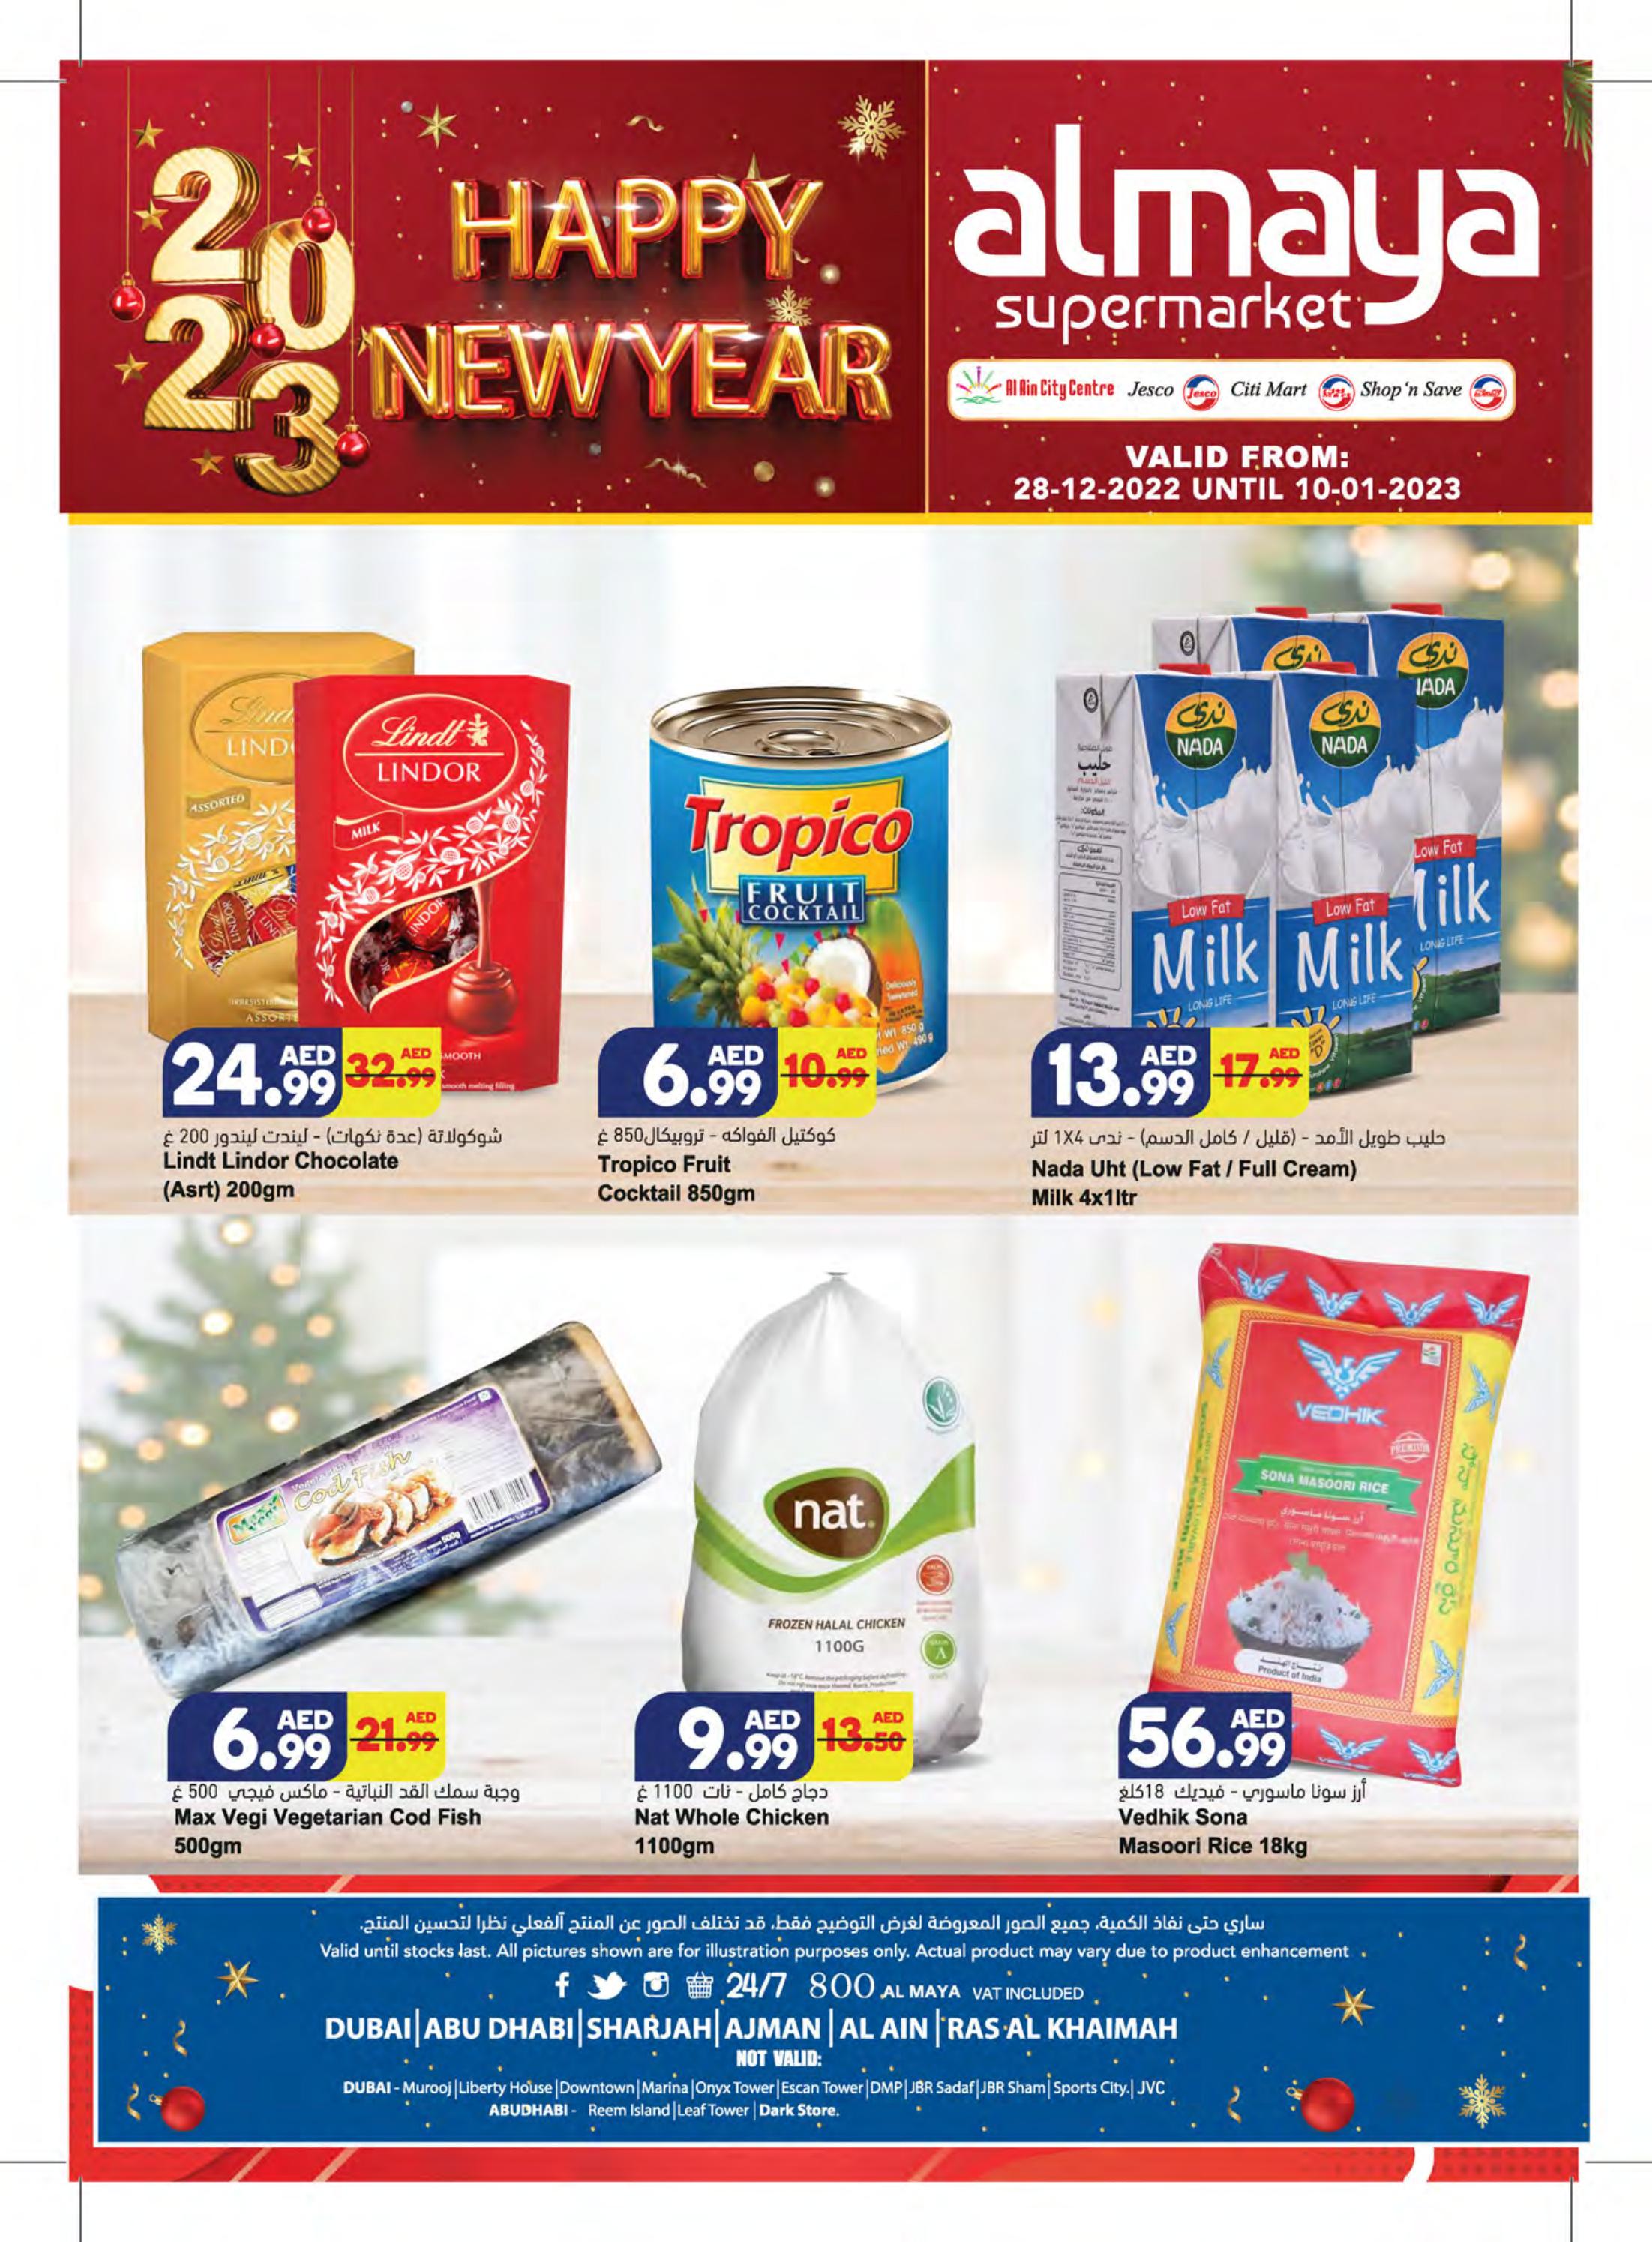 Almaya-new-year-sale